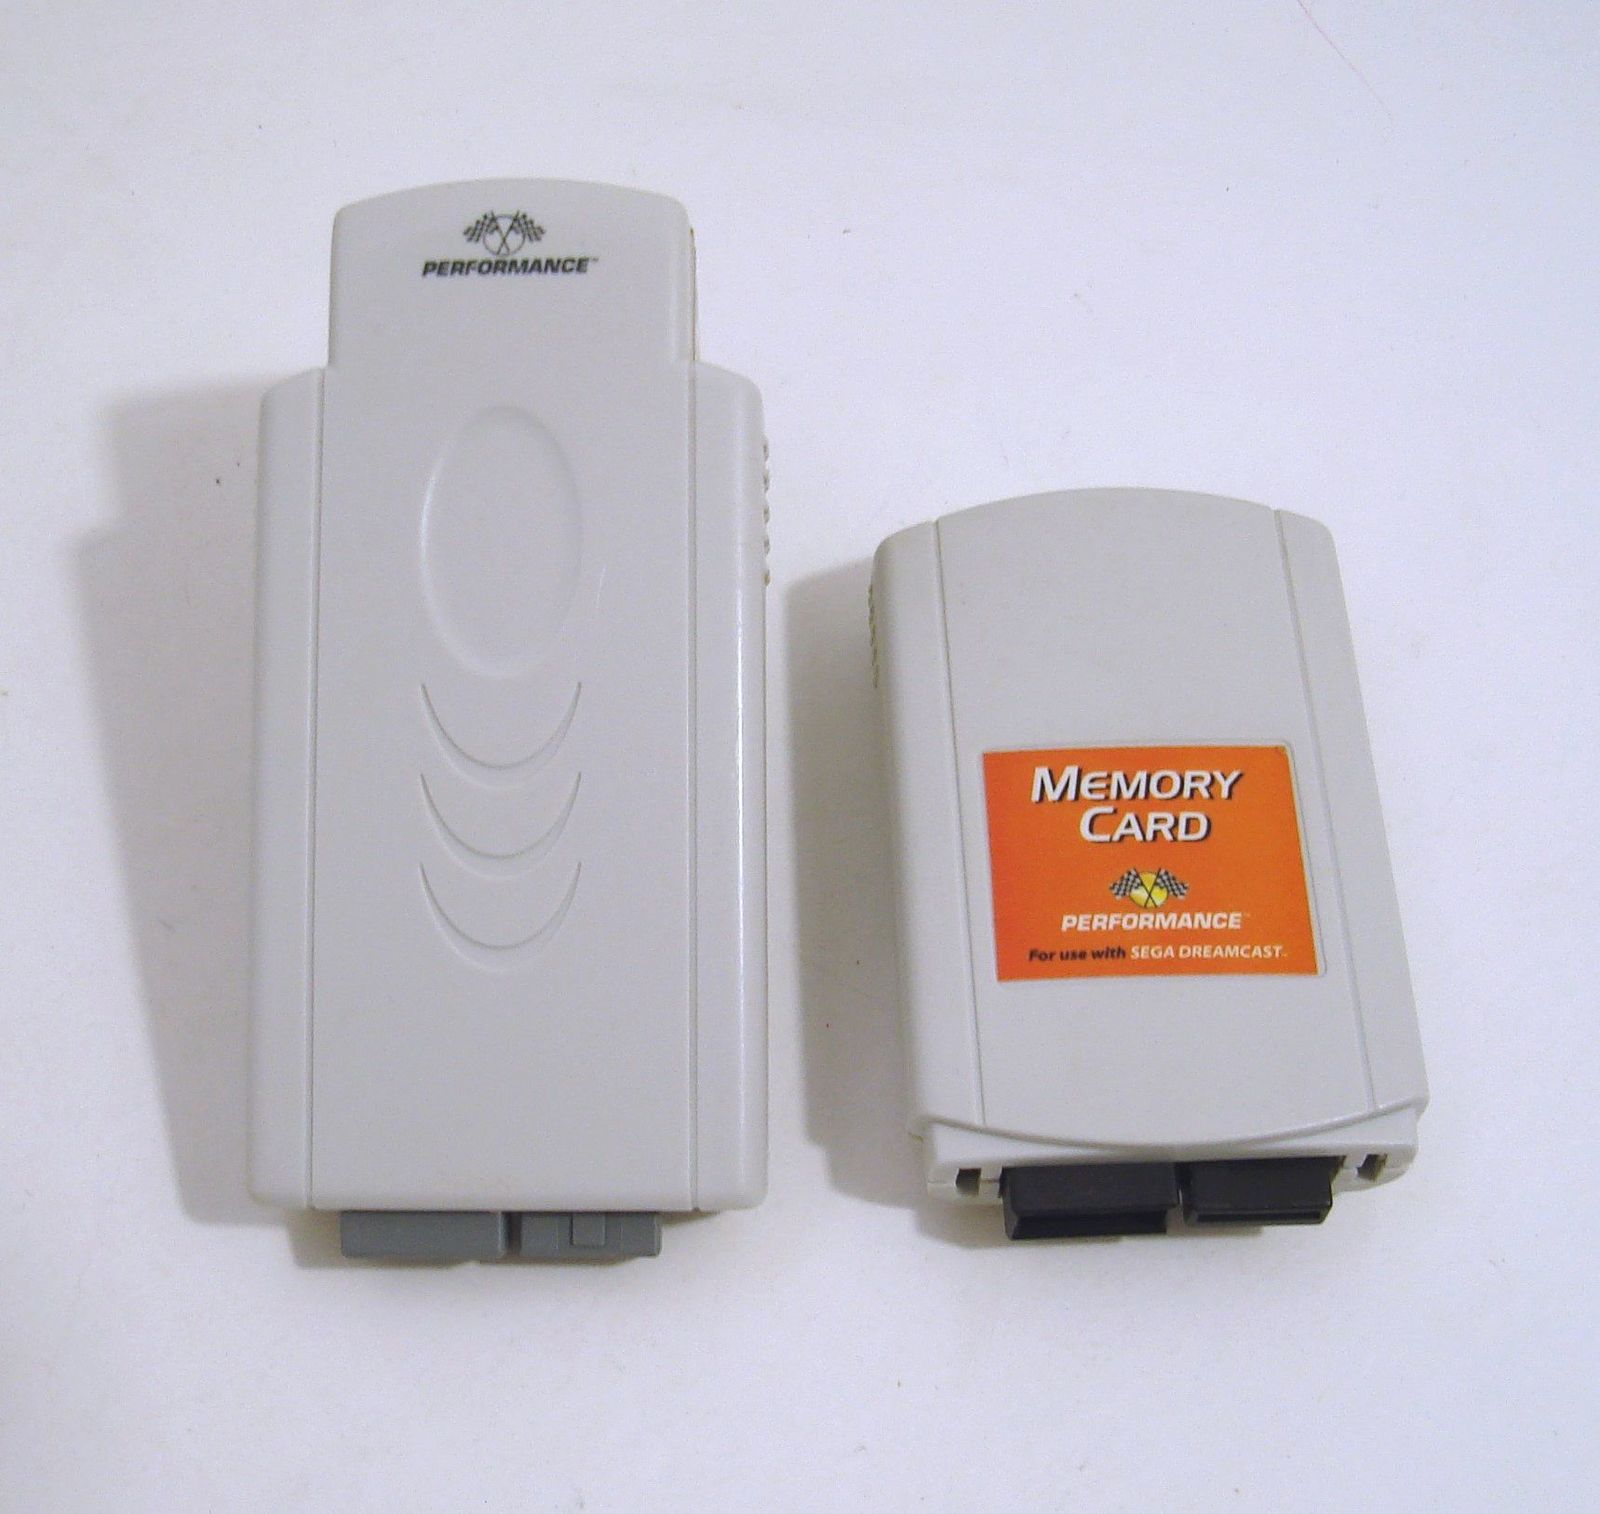 Primary image for Sega Dreamcast PERFORMANCE Memory Card, Tremor Pak